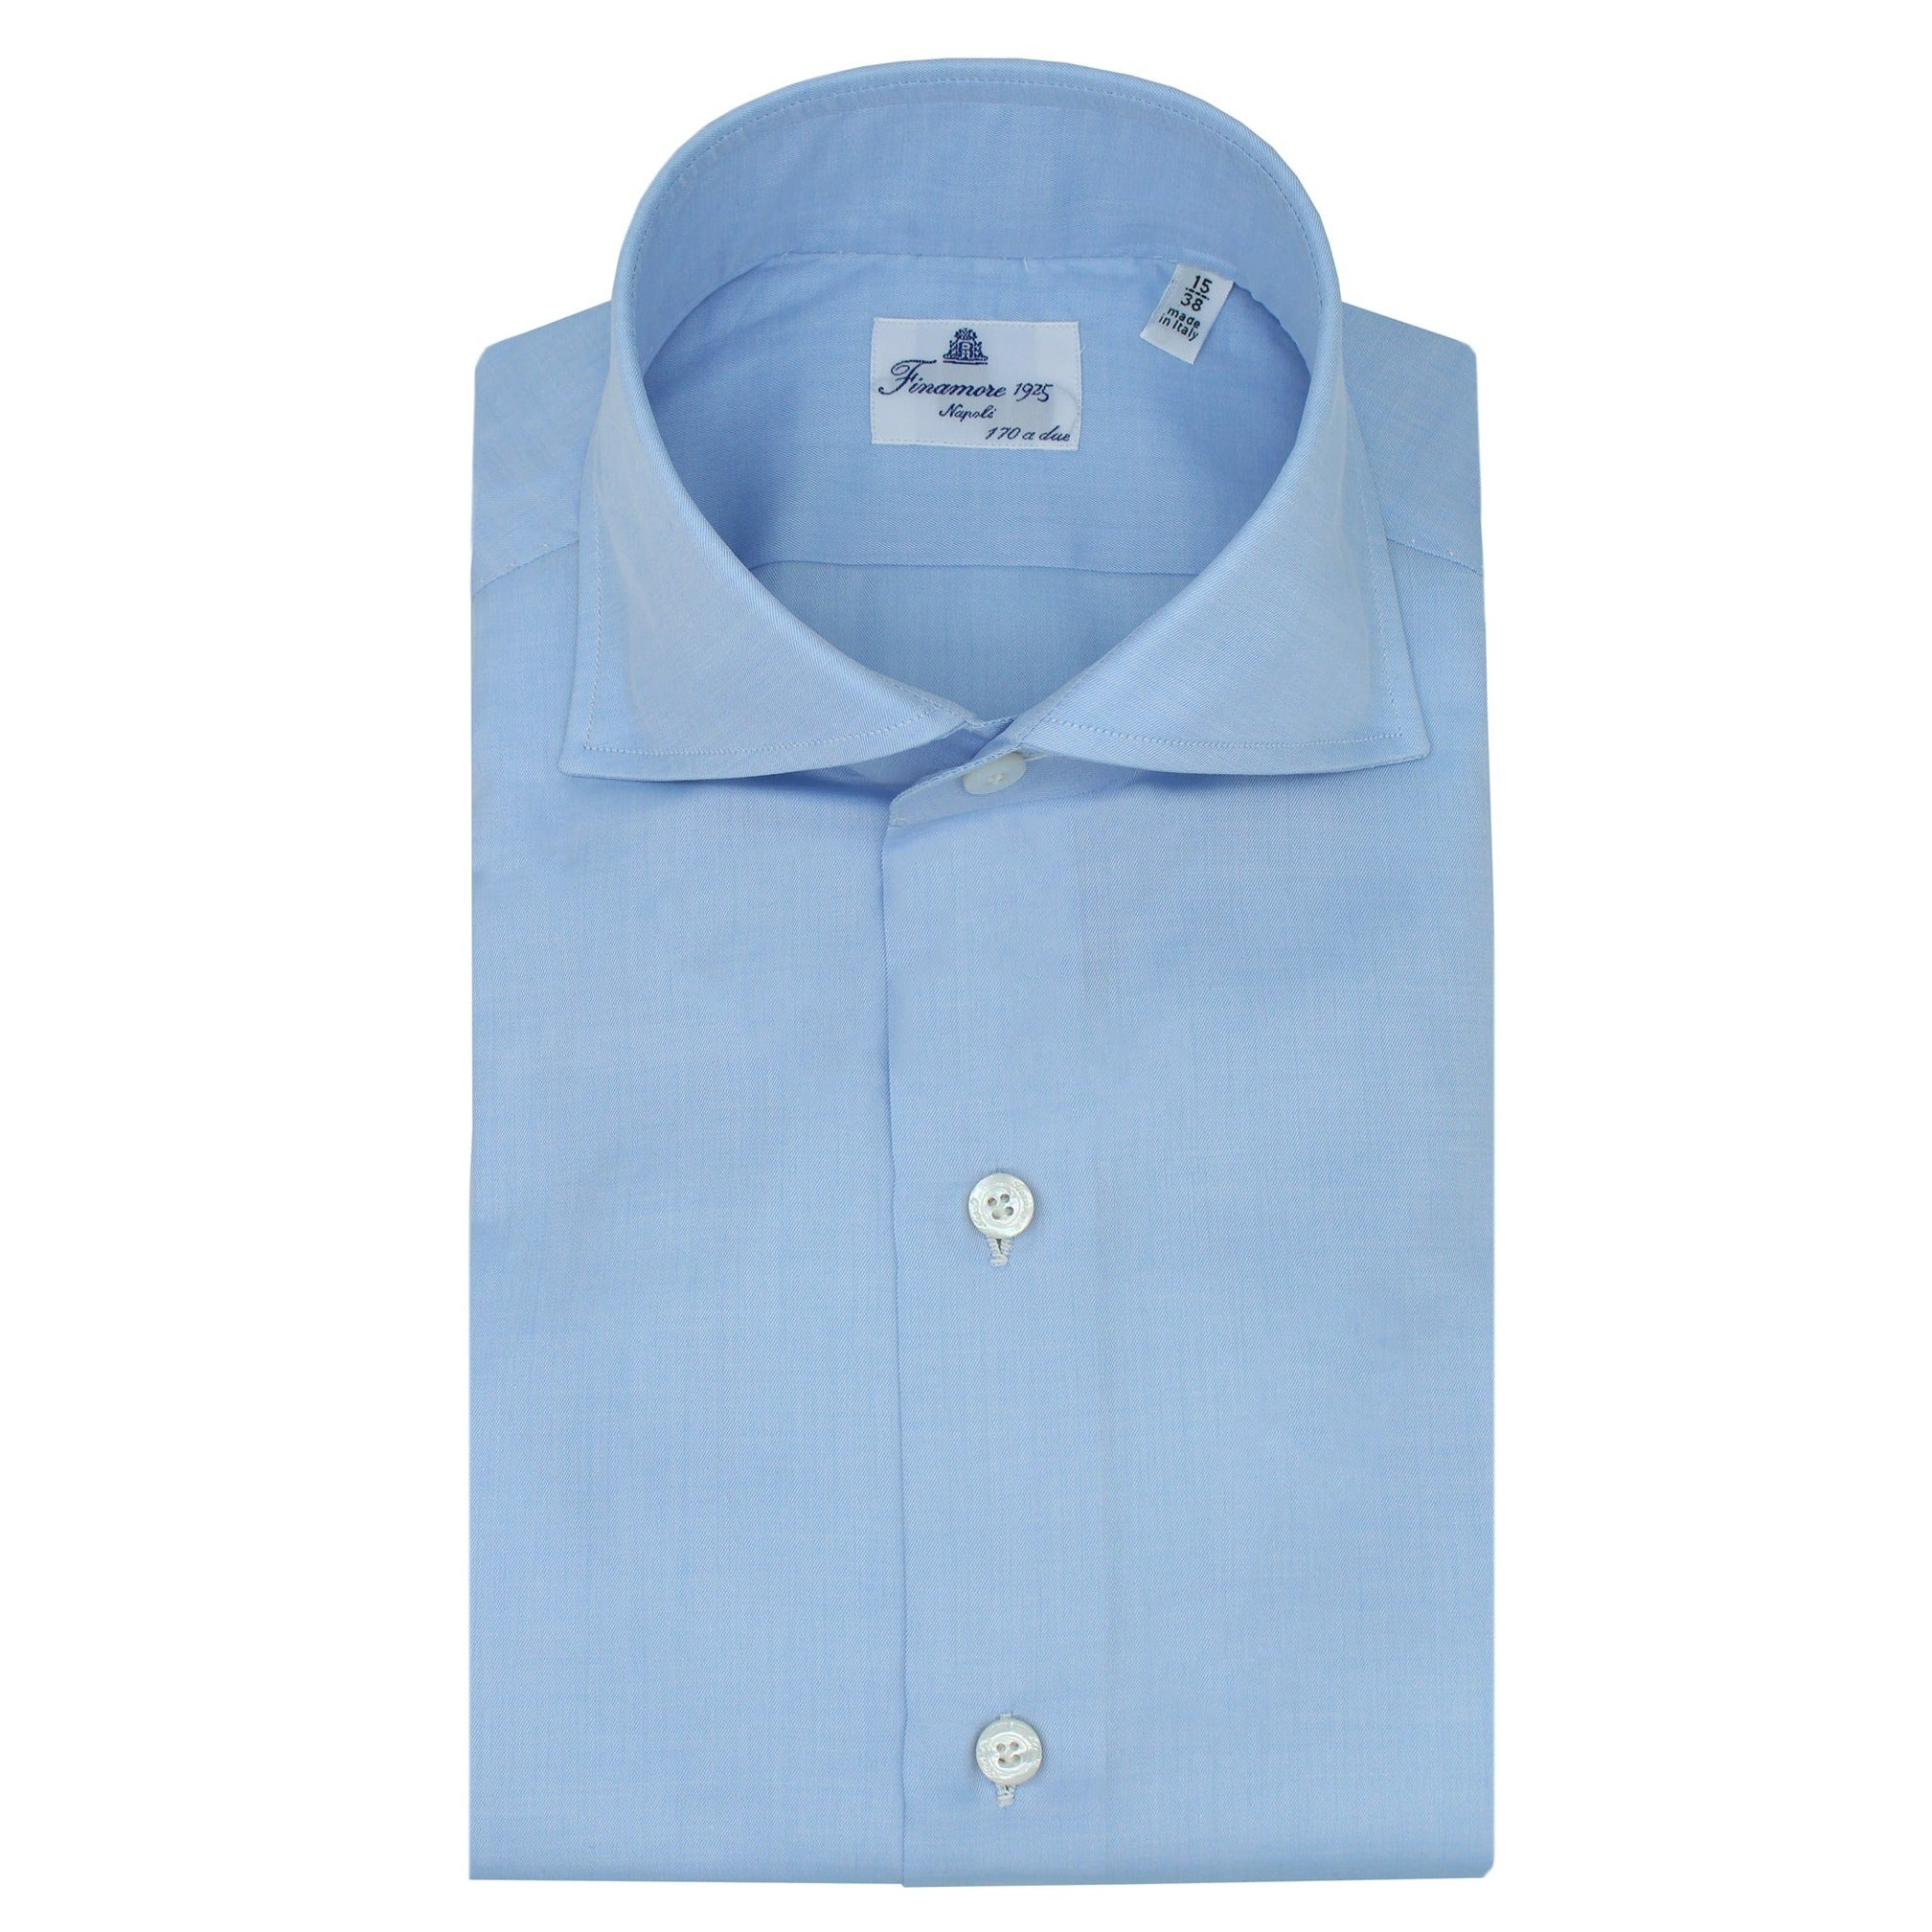 Classic Twill shirt Napoli 170 a Due cotton giza 45 light blue